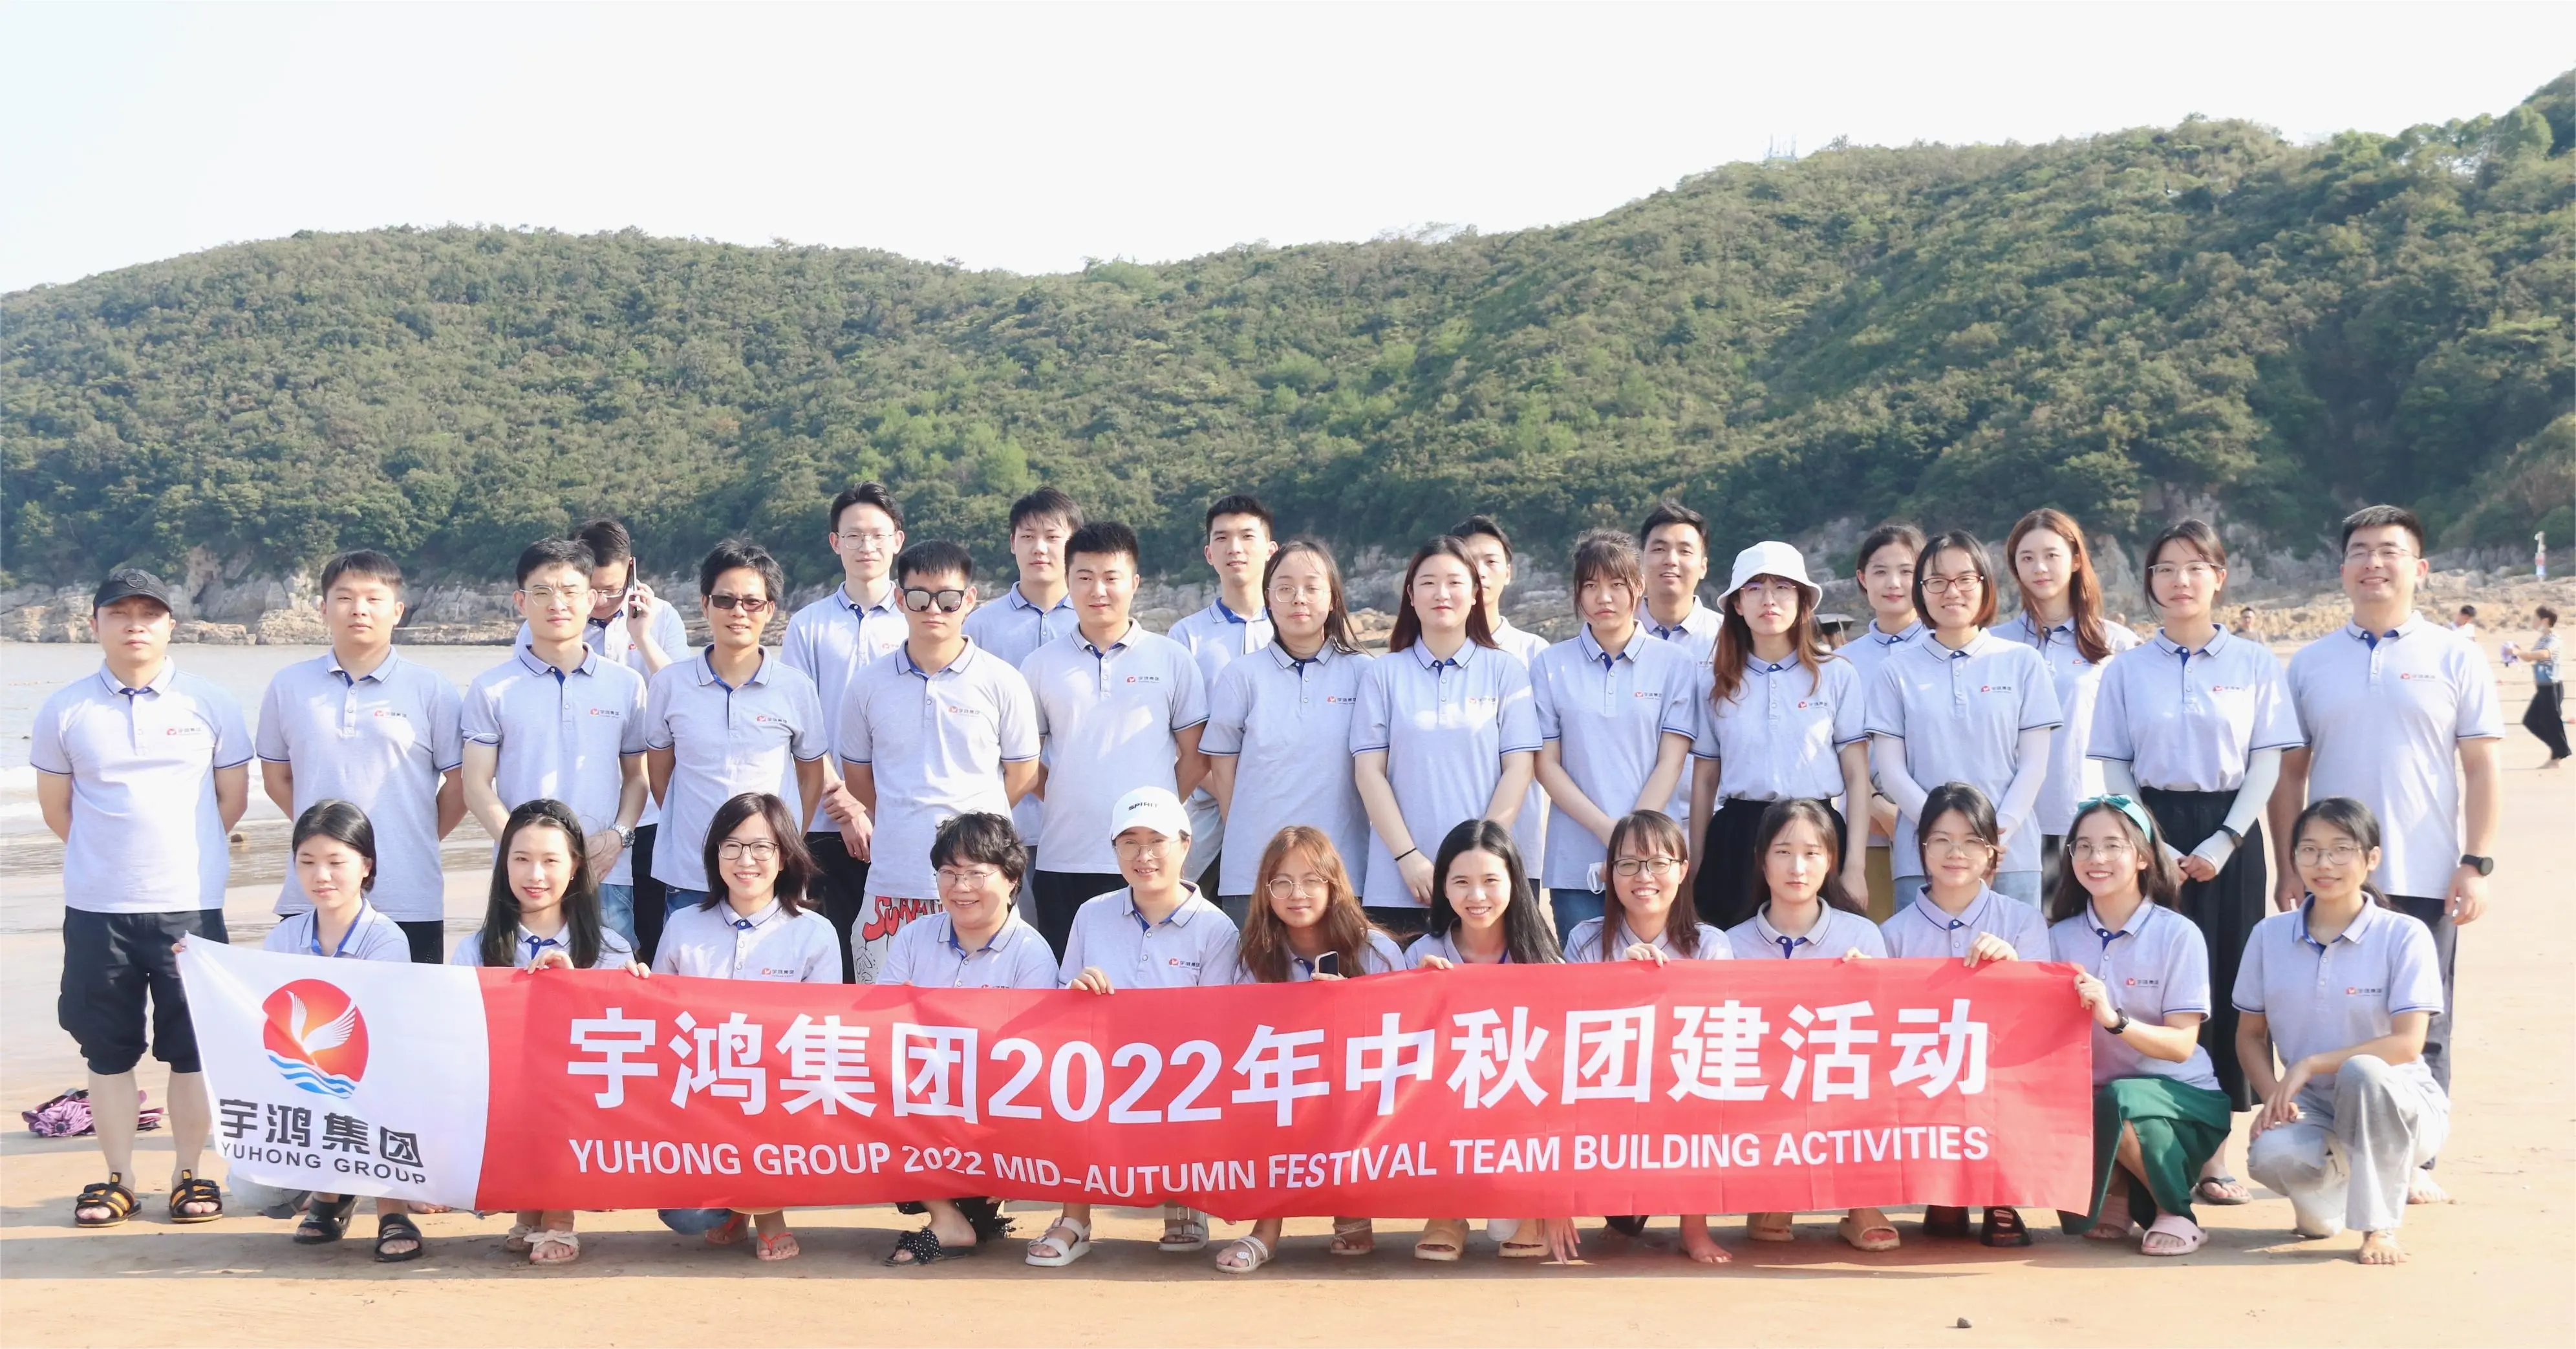 YUHONG GROUP 2022 Mid-Autumn Team Building Activity